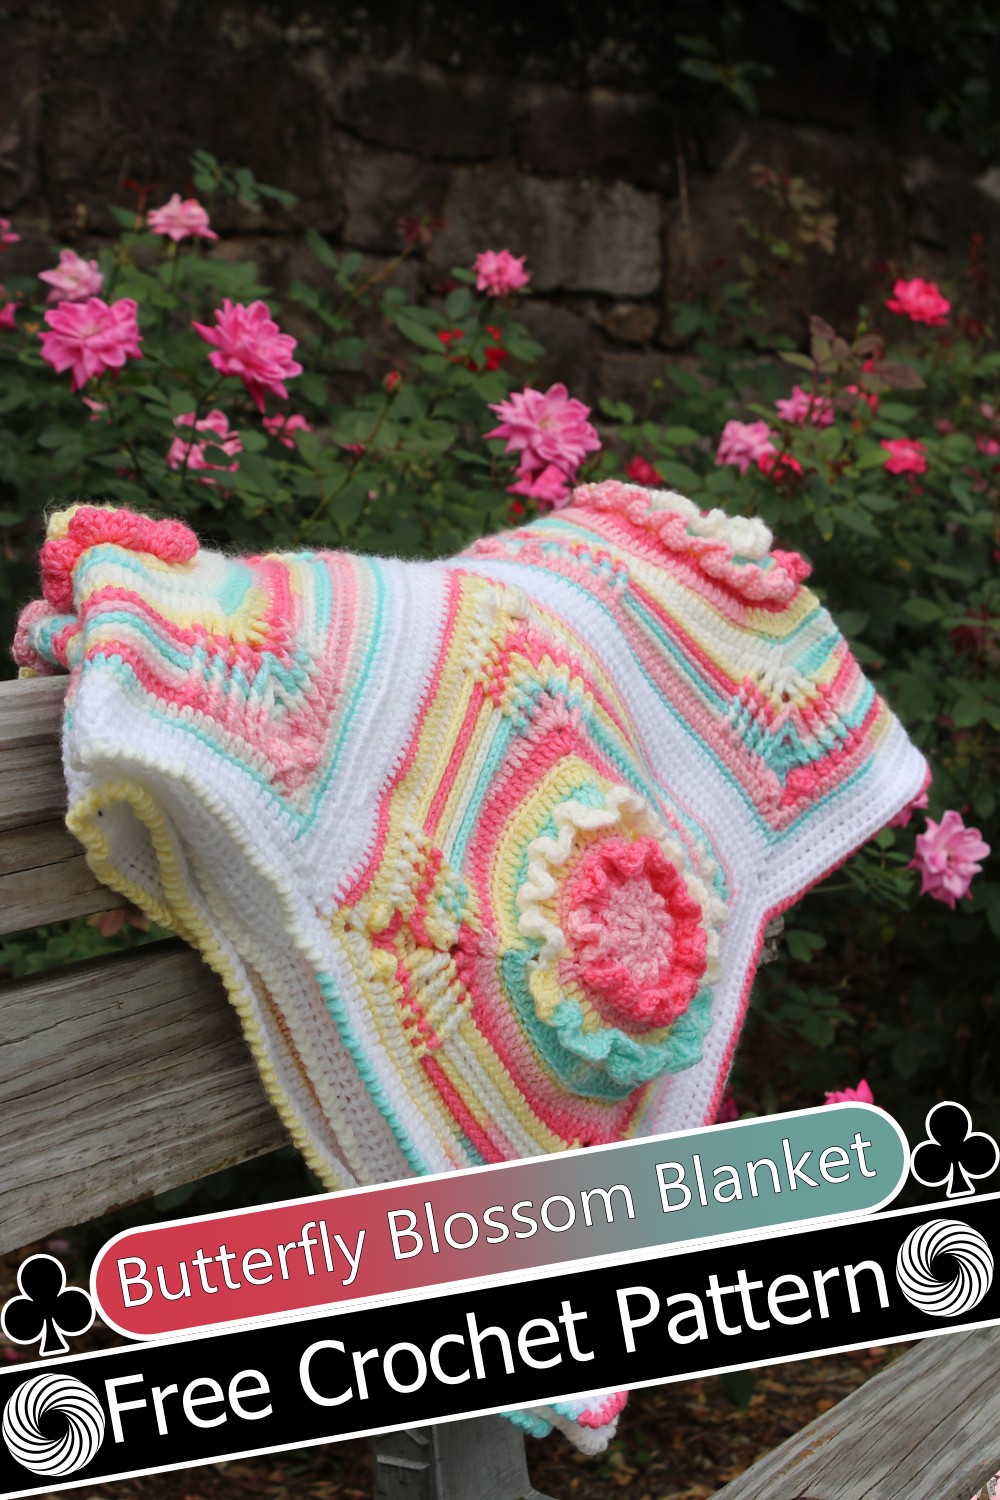 Butterfly Blossom Blanket